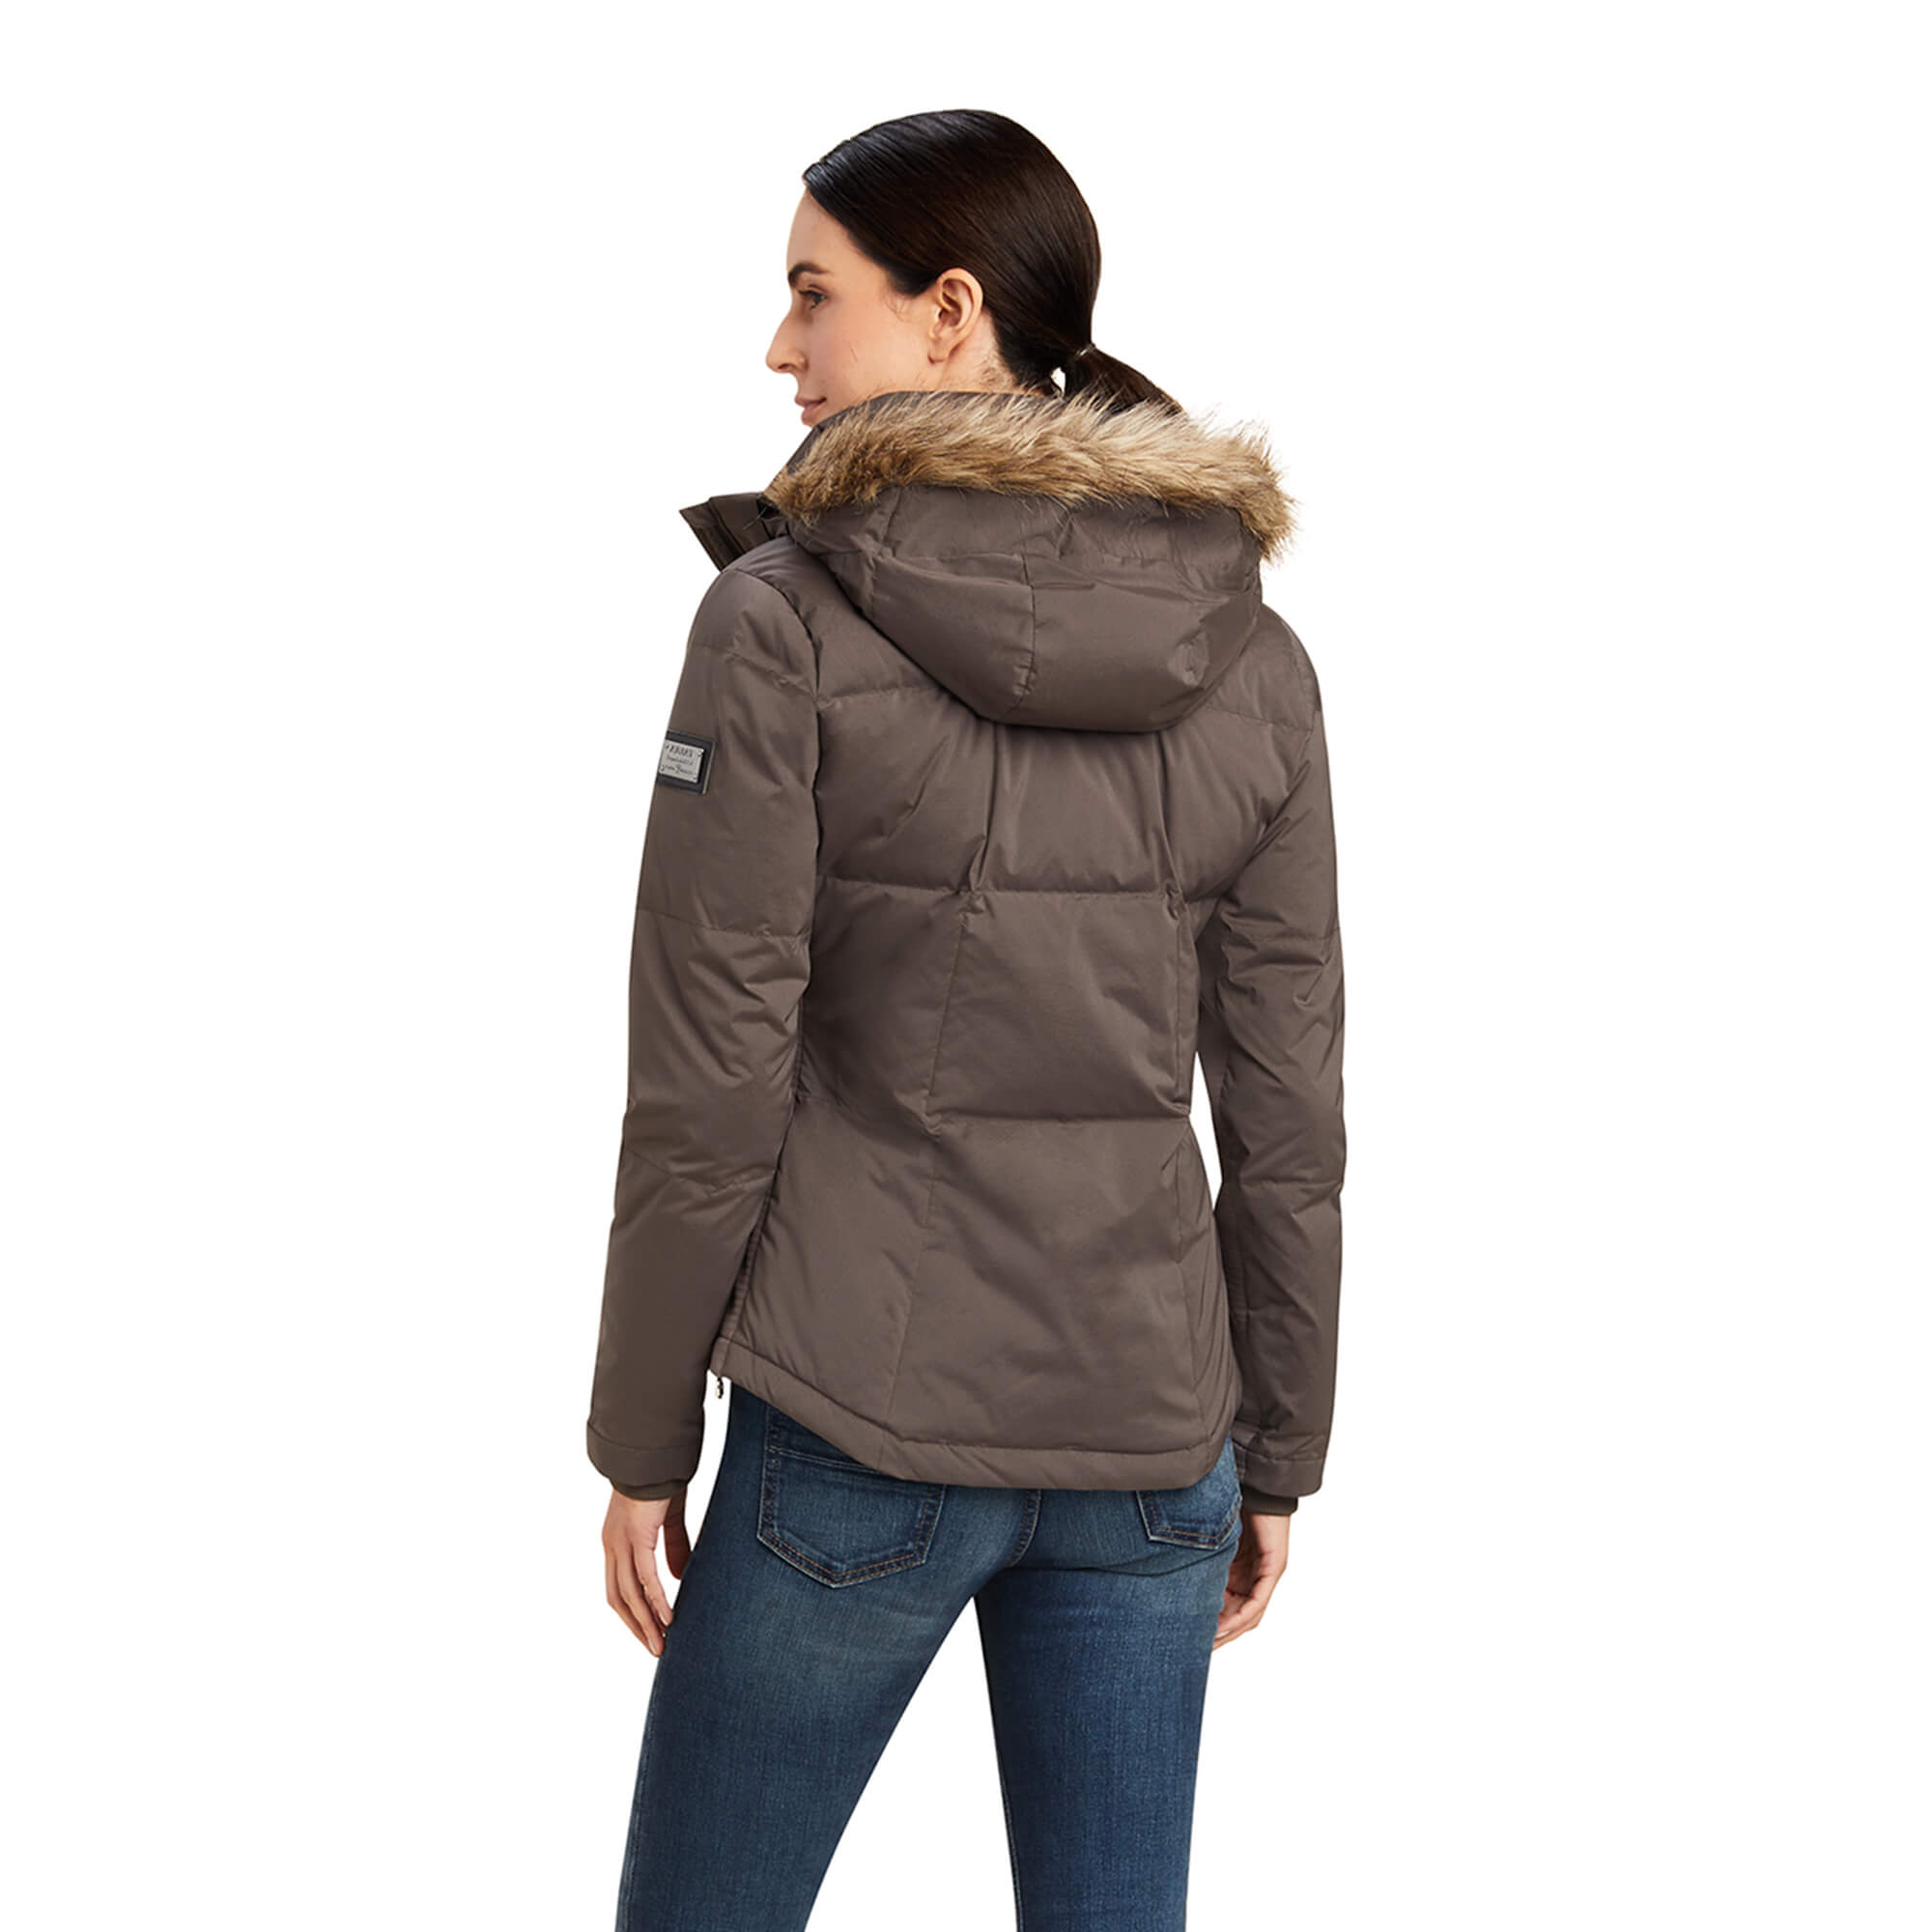 Ariat Women's Altitude Jacket - Bark